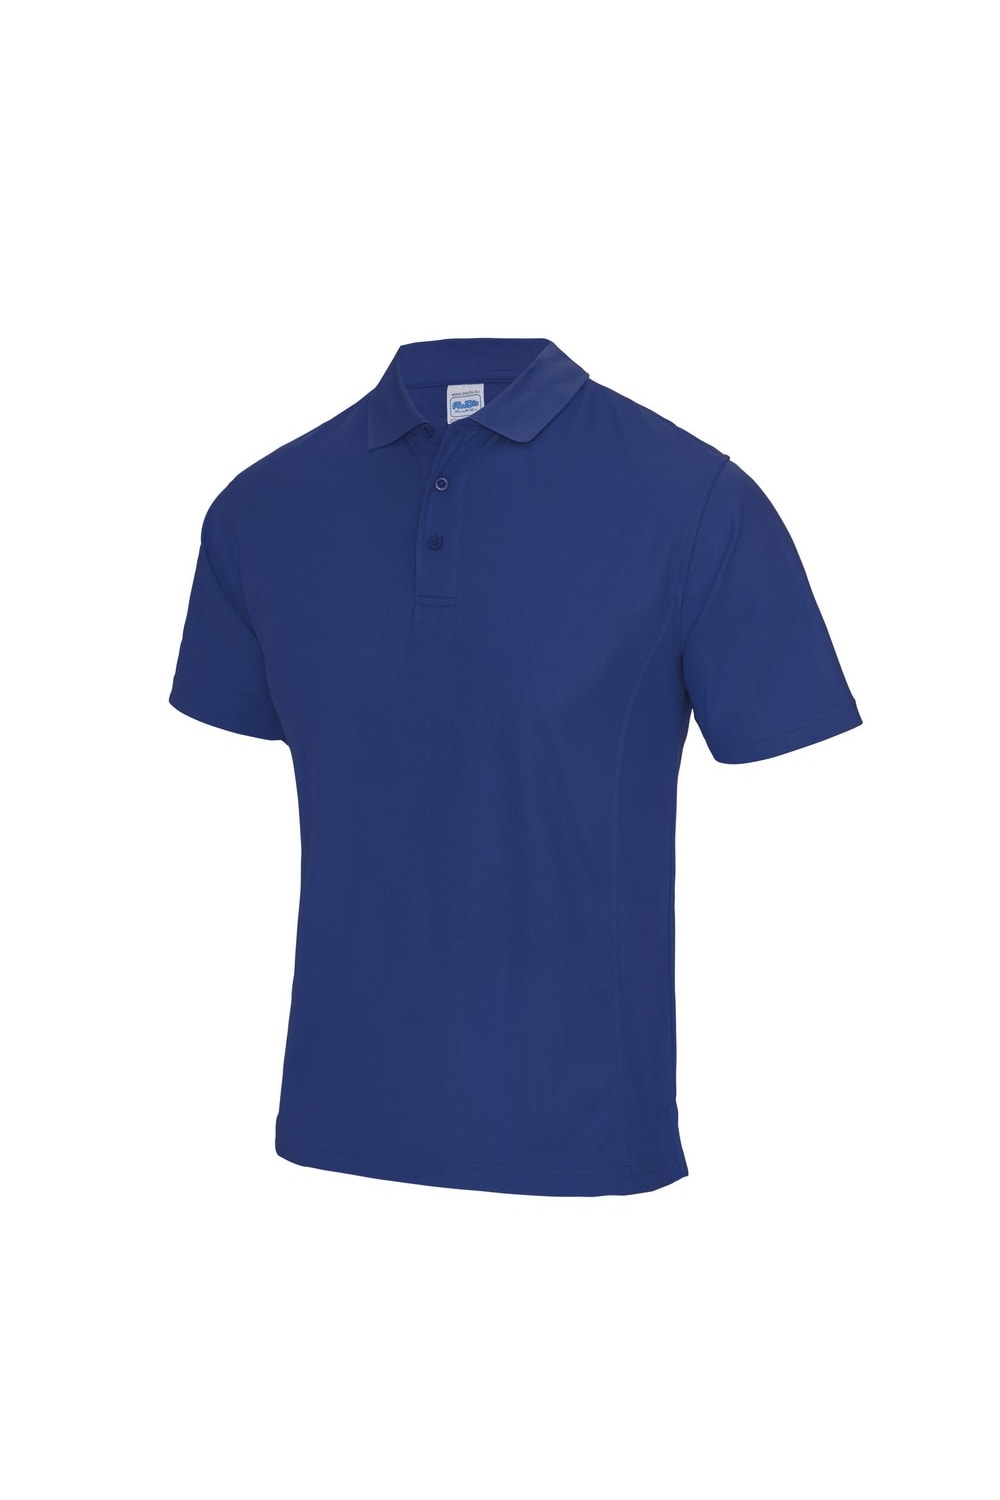 Cool Mens Super Cool Sports Performance Short Sleeve Polo Shirt - Royal Blue